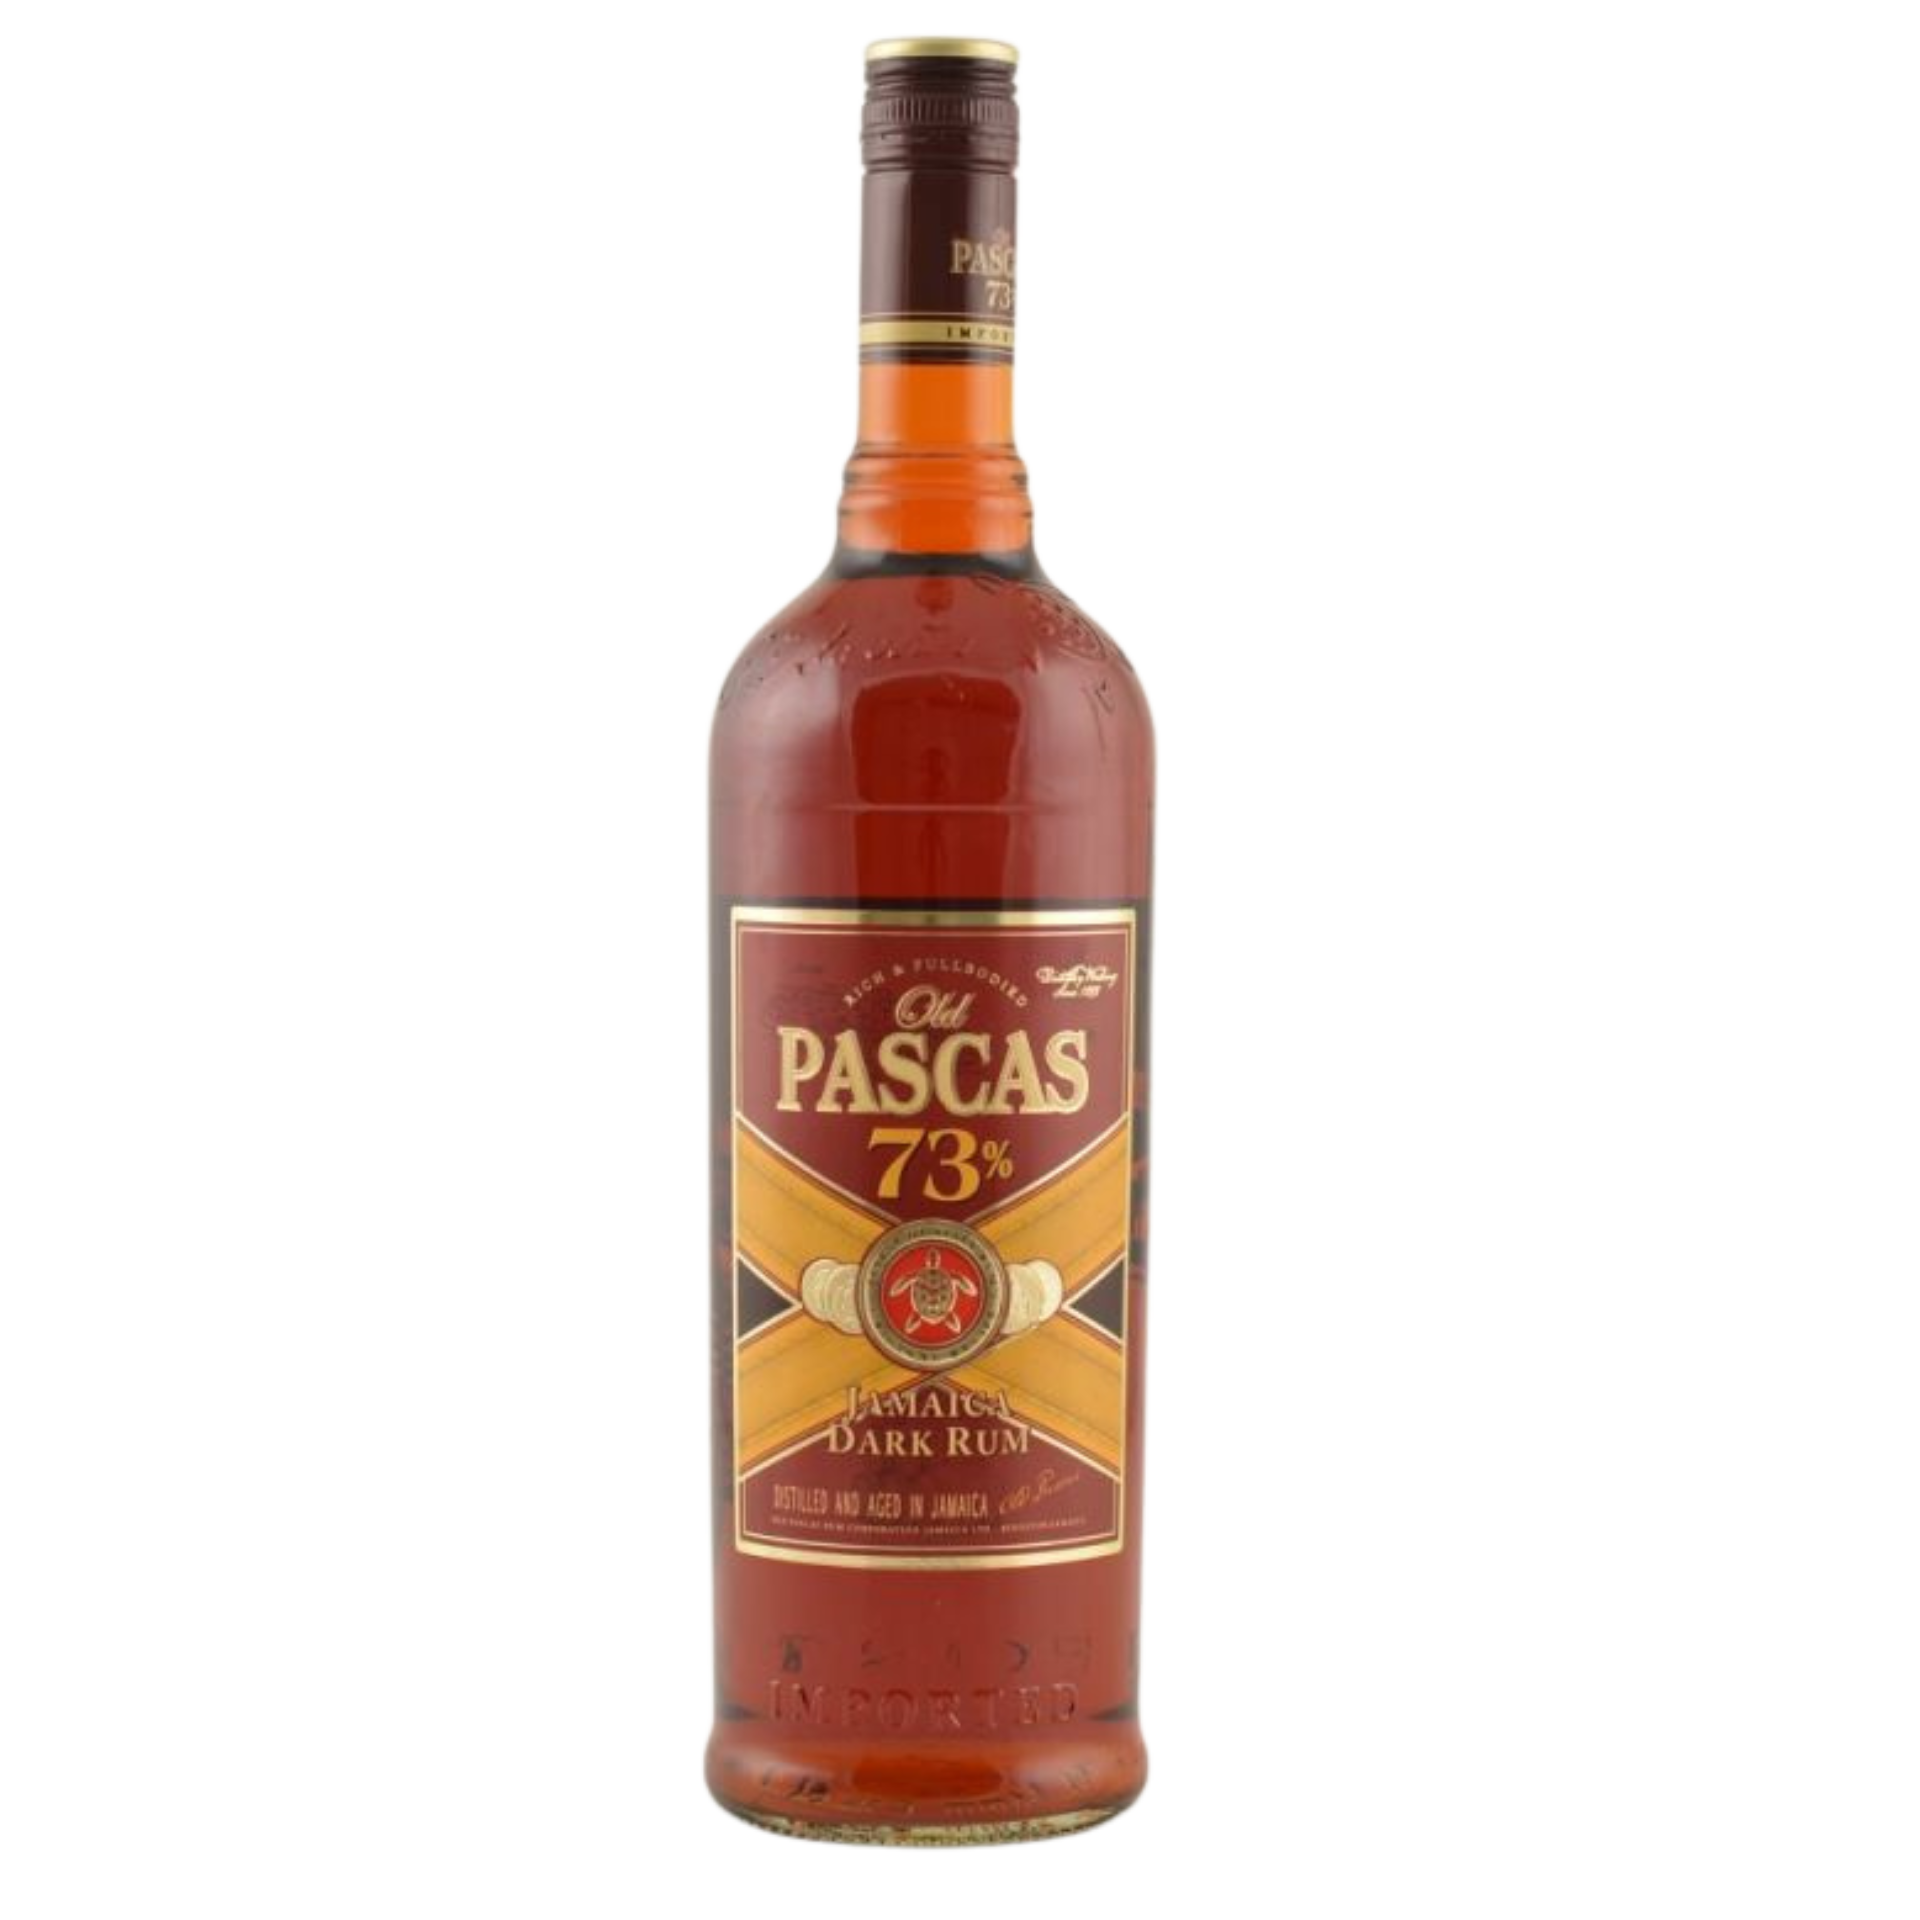 Old Pascas Jamaica Rum Overproof 73% 1,0l